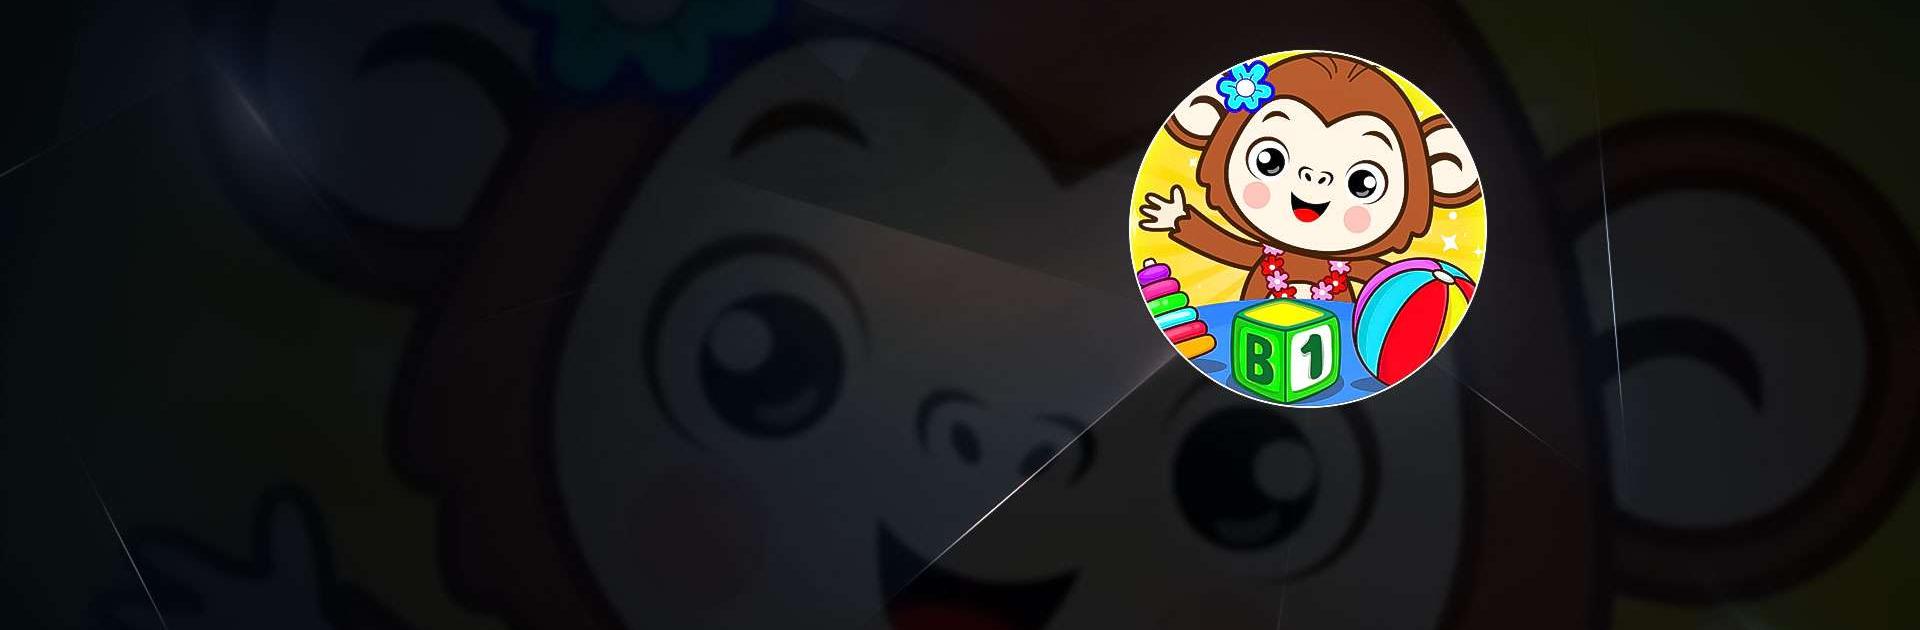 ElePant World: Kids Games app